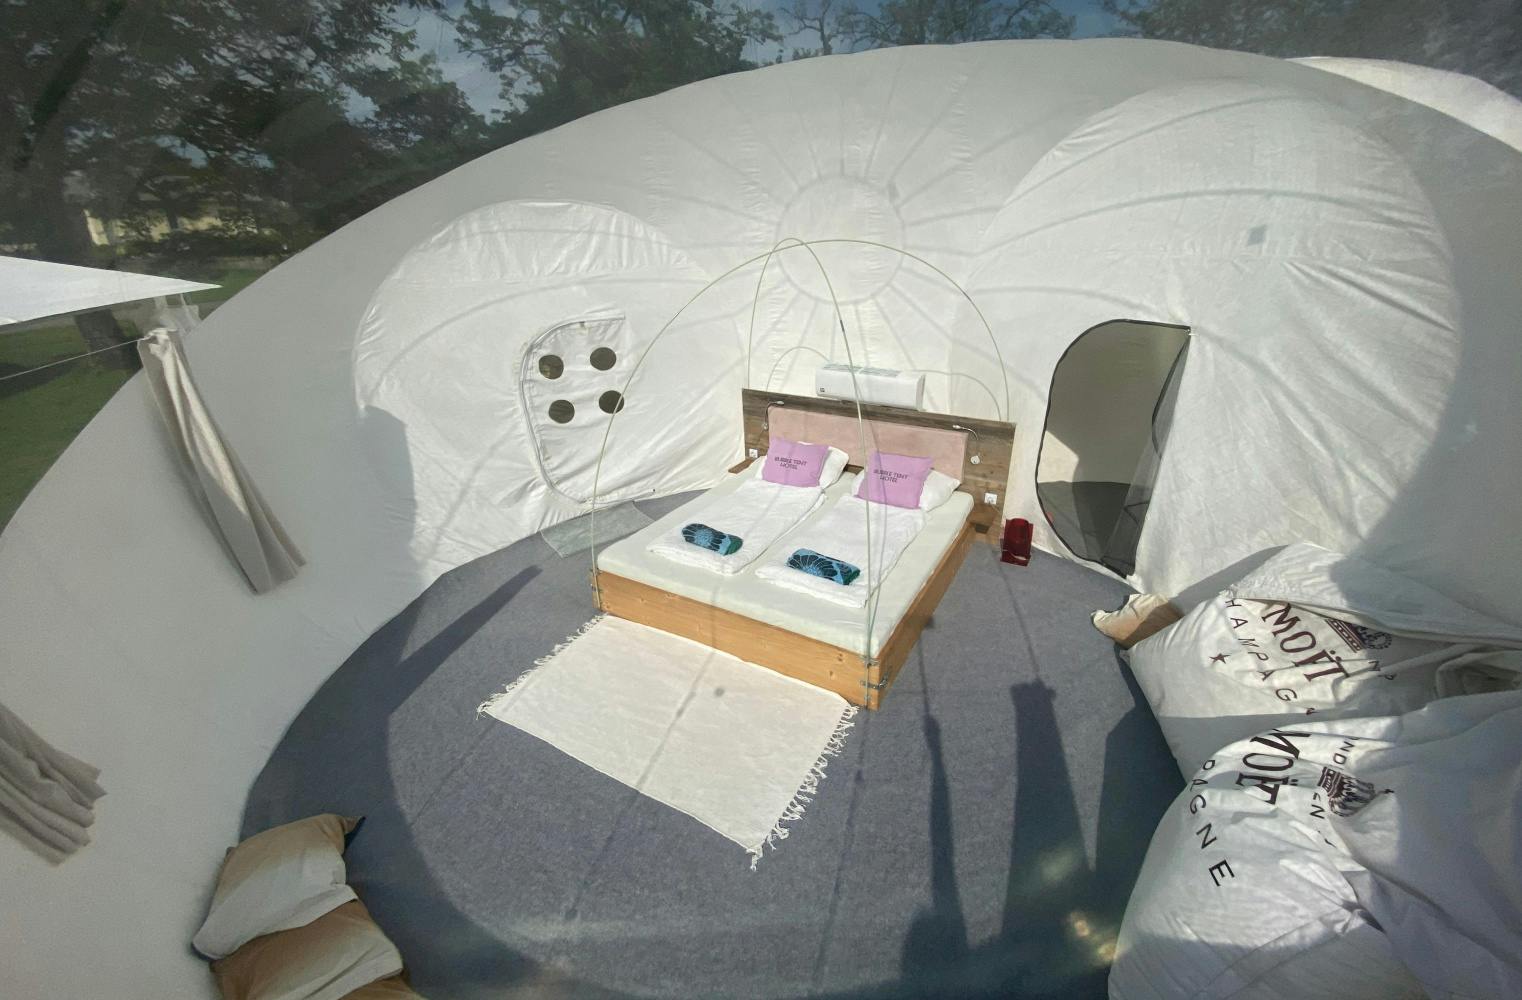 Übernachtung im Bubble Tent | Romantik unterm Sternenzelt